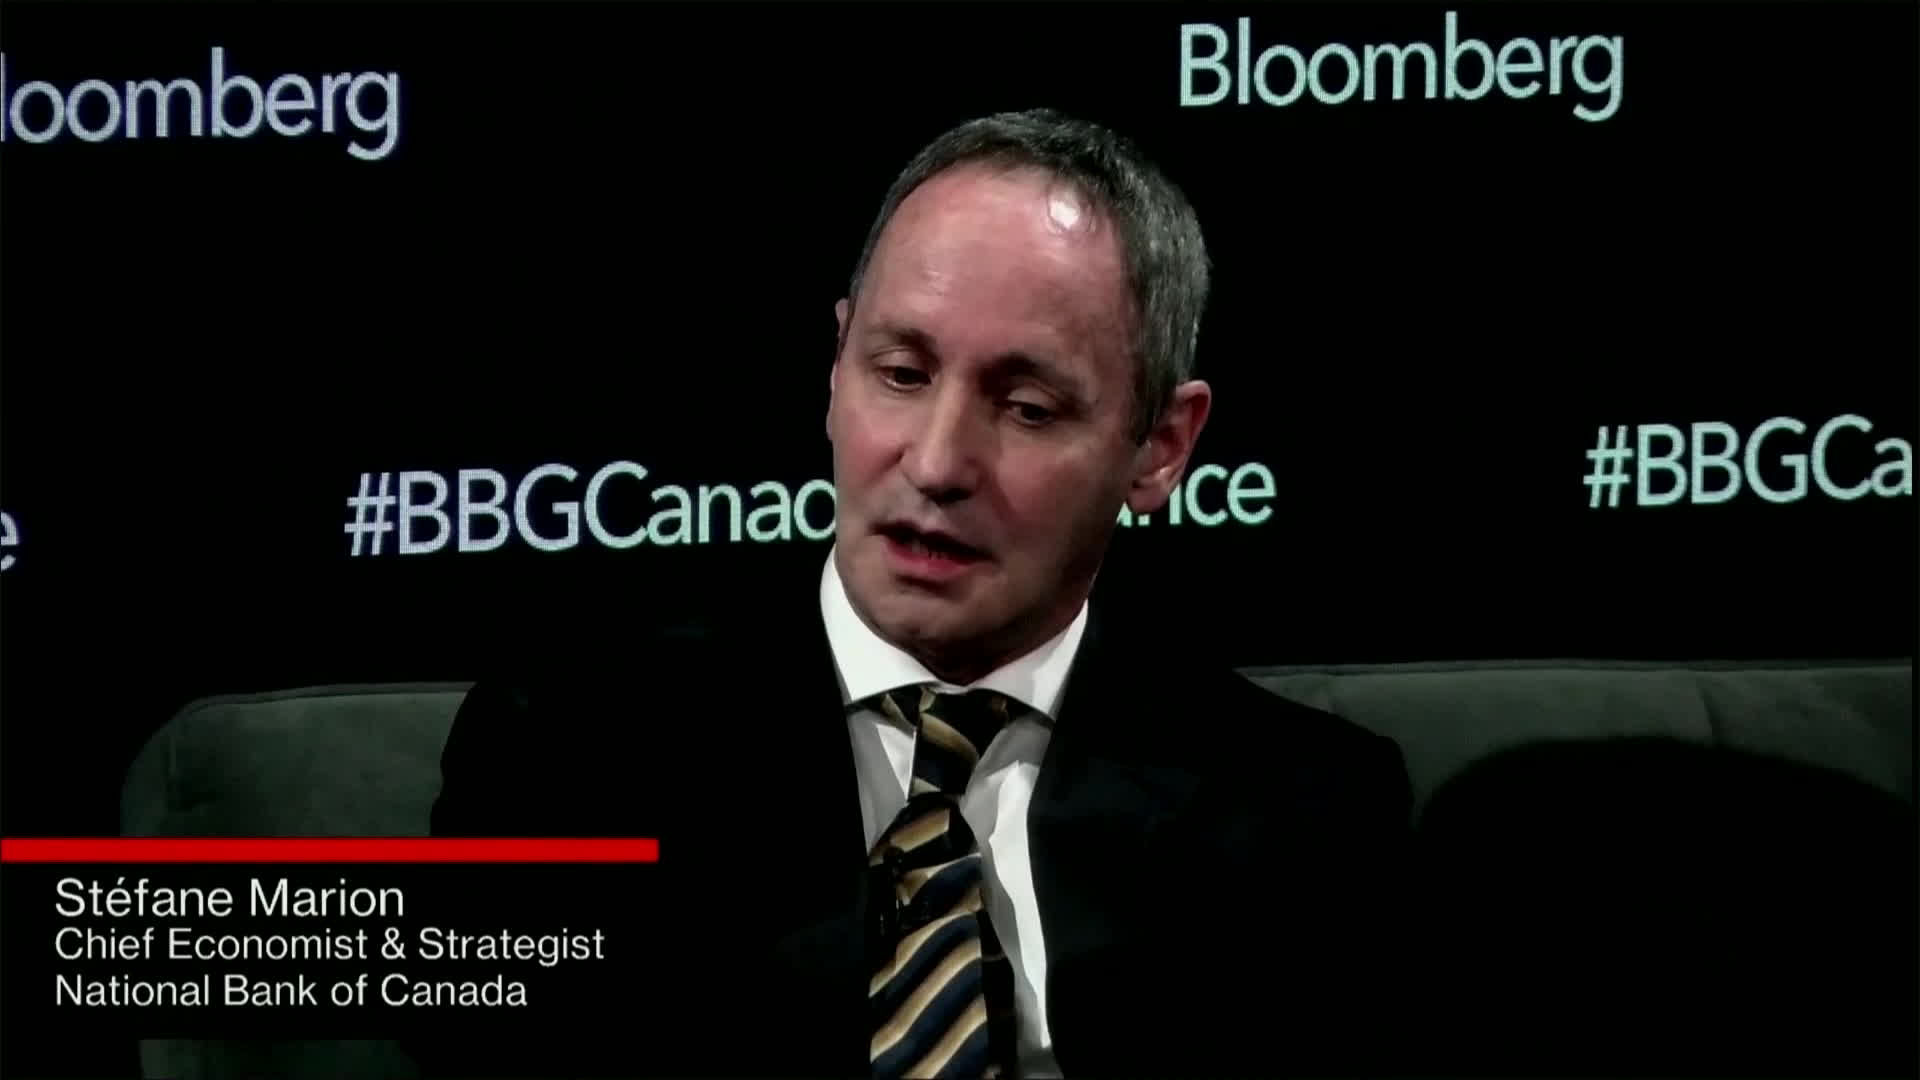 National Bank of Canada Economist on Economic Trends